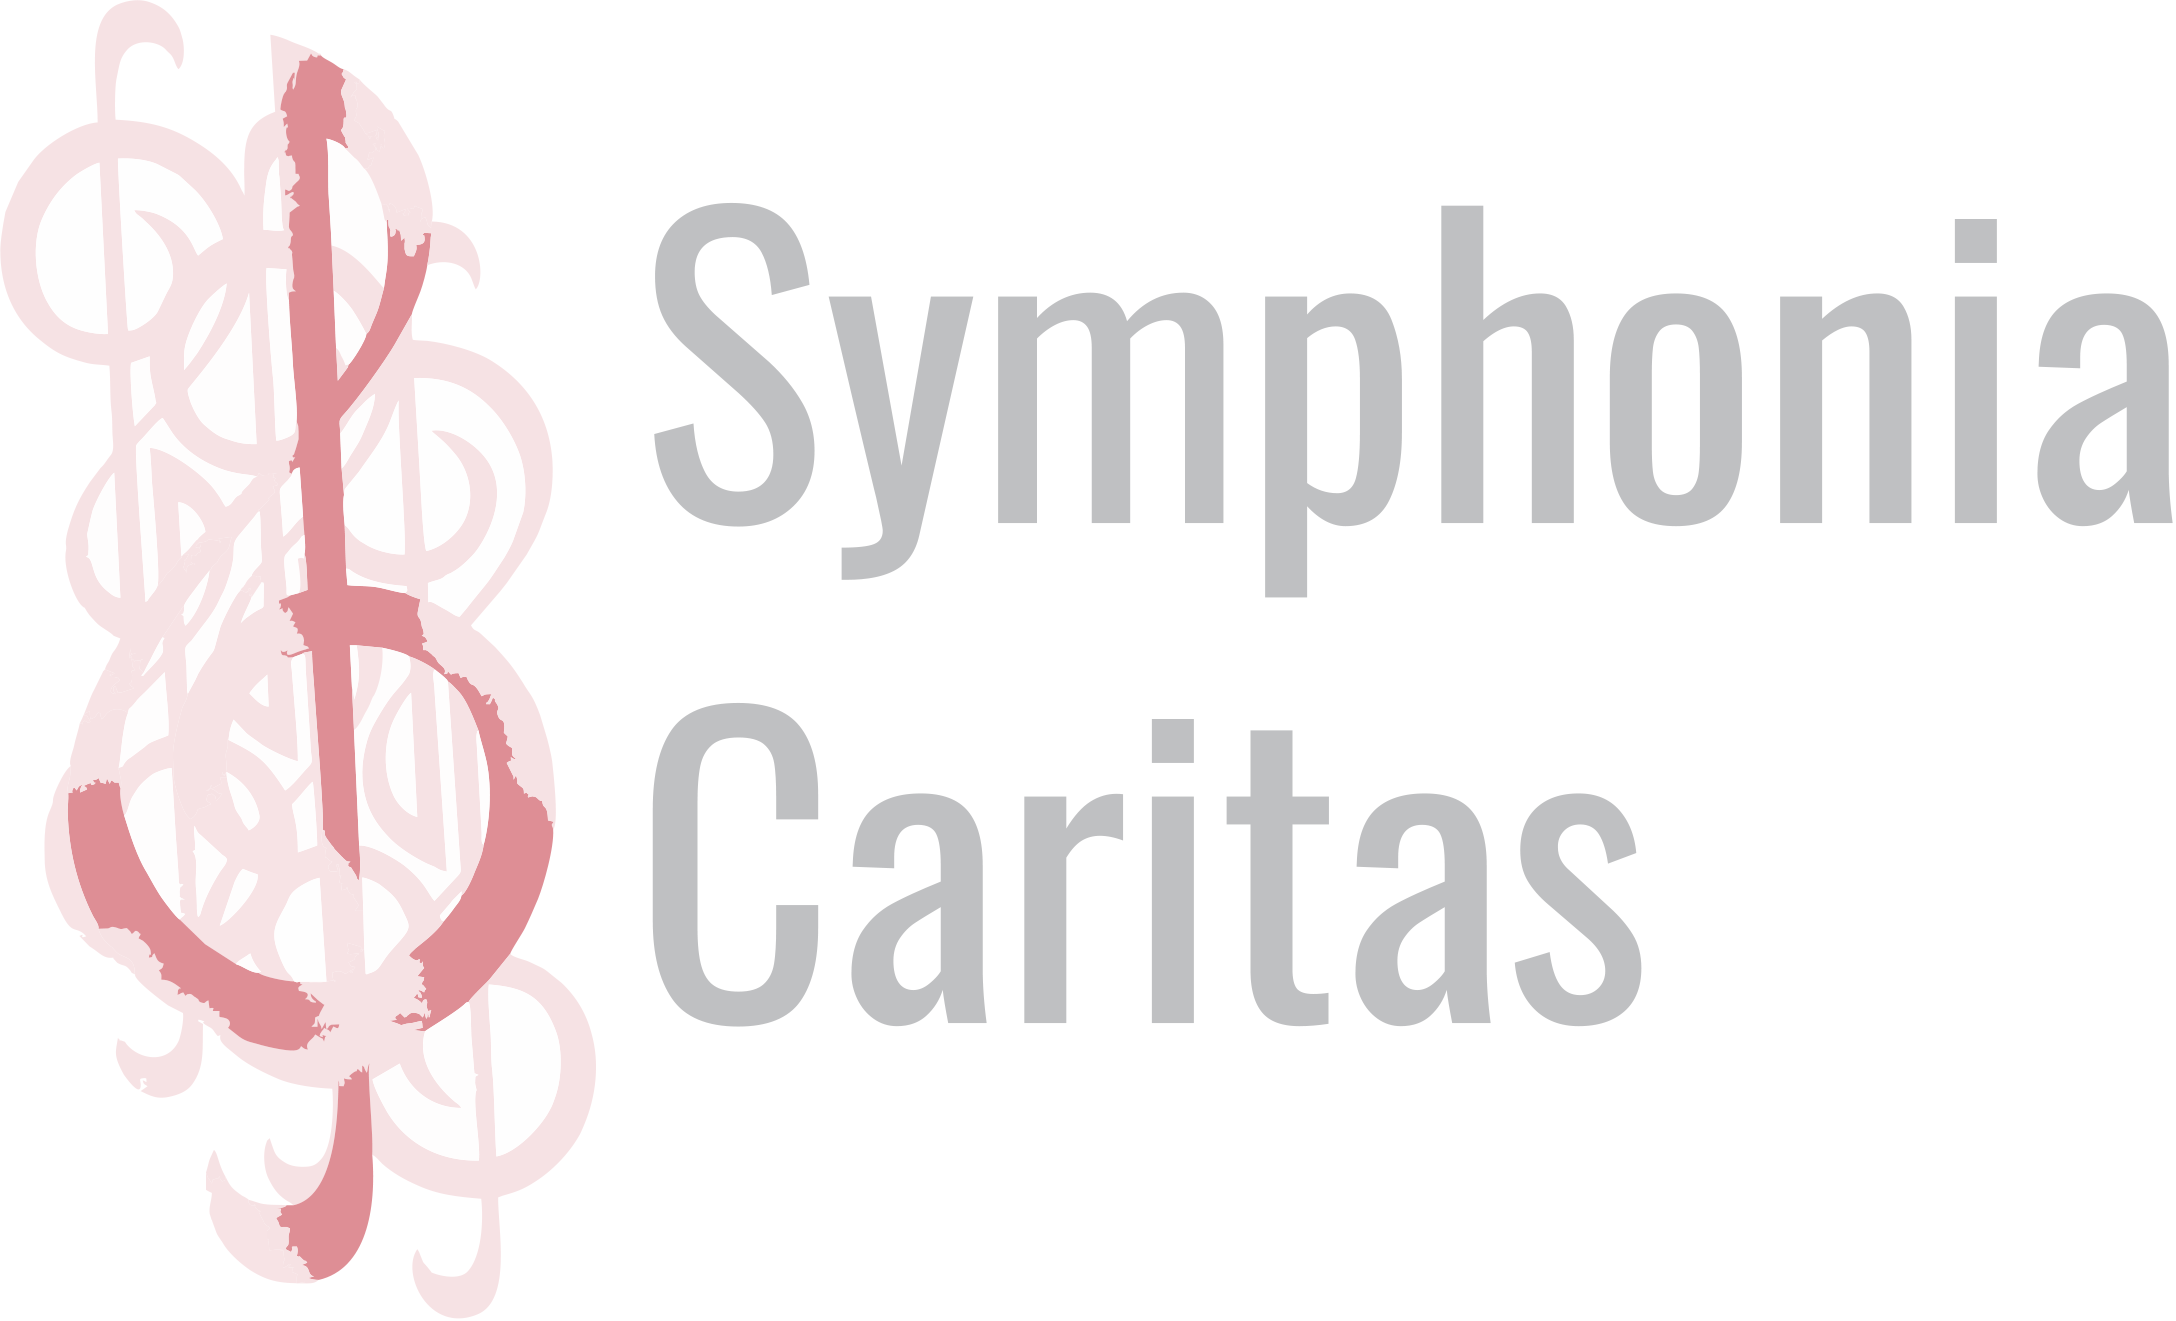 symponiacaritas_logo.png